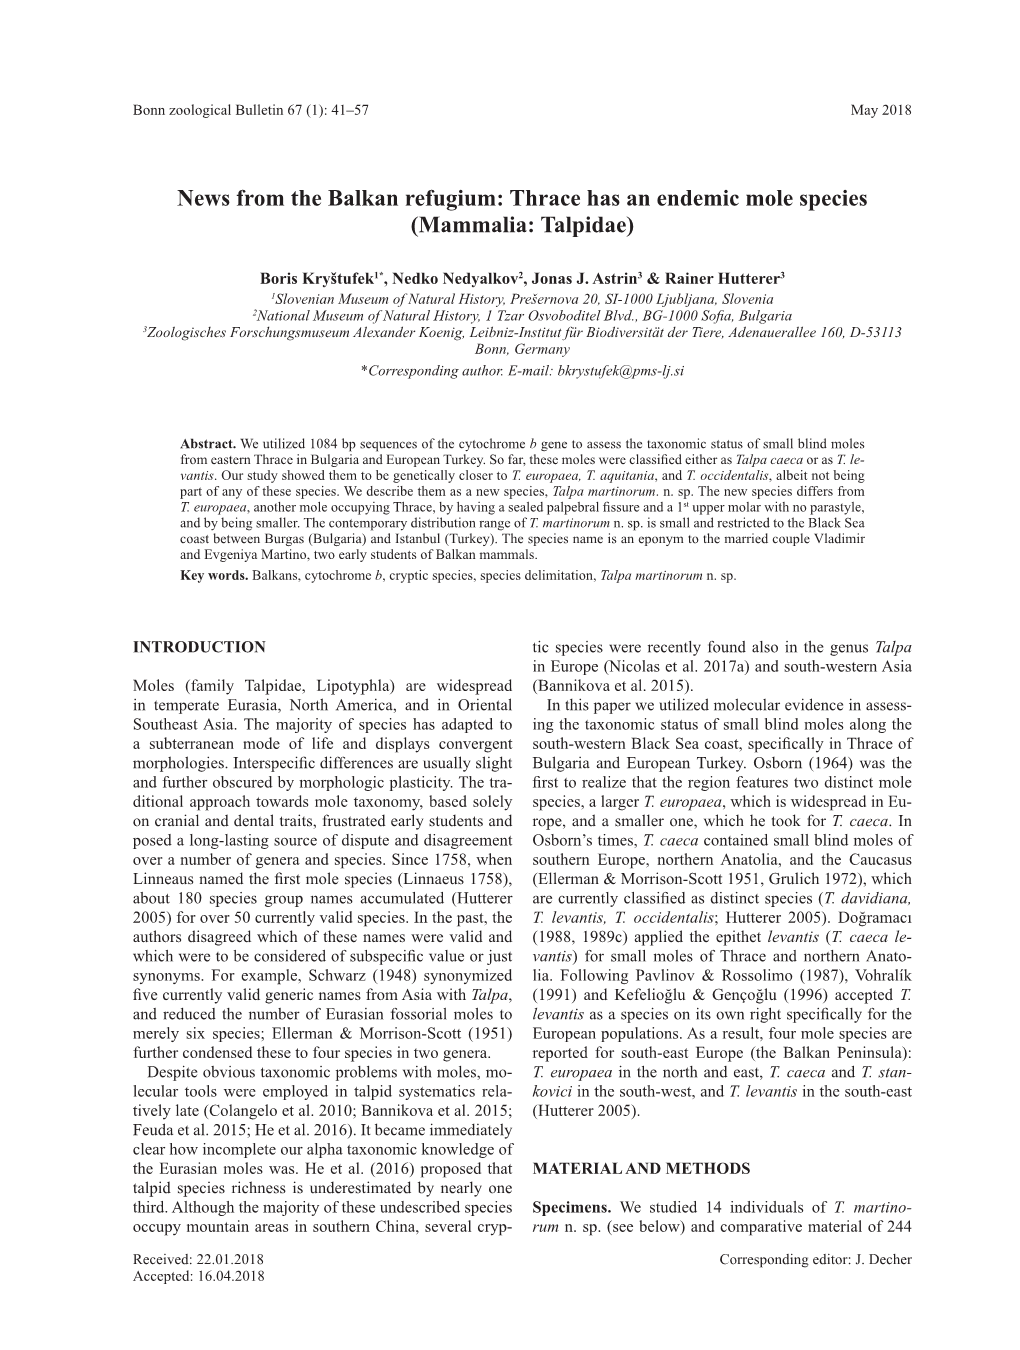 News from the Balkan Refugium: Thrace Has an Endemic Mole Species (Mammalia: Talpidae)